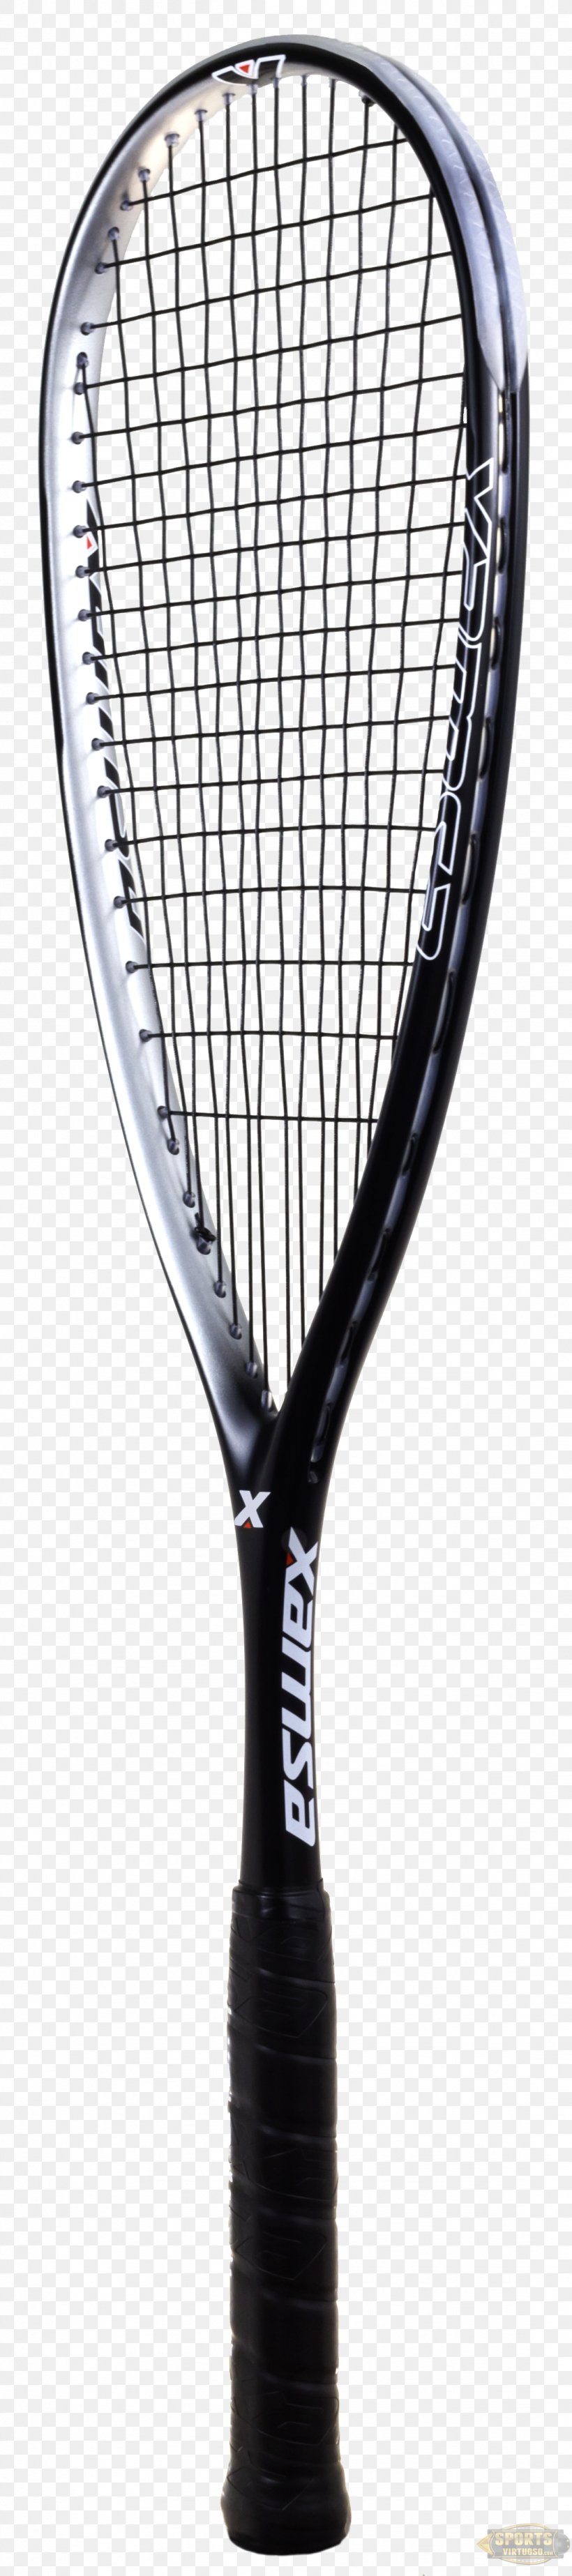 Strings Racket Rakieta Do Squasha Tecnifibre, PNG, 1094x4929px, Strings, Badminton, Badmintonracket, Email, Email Address Download Free